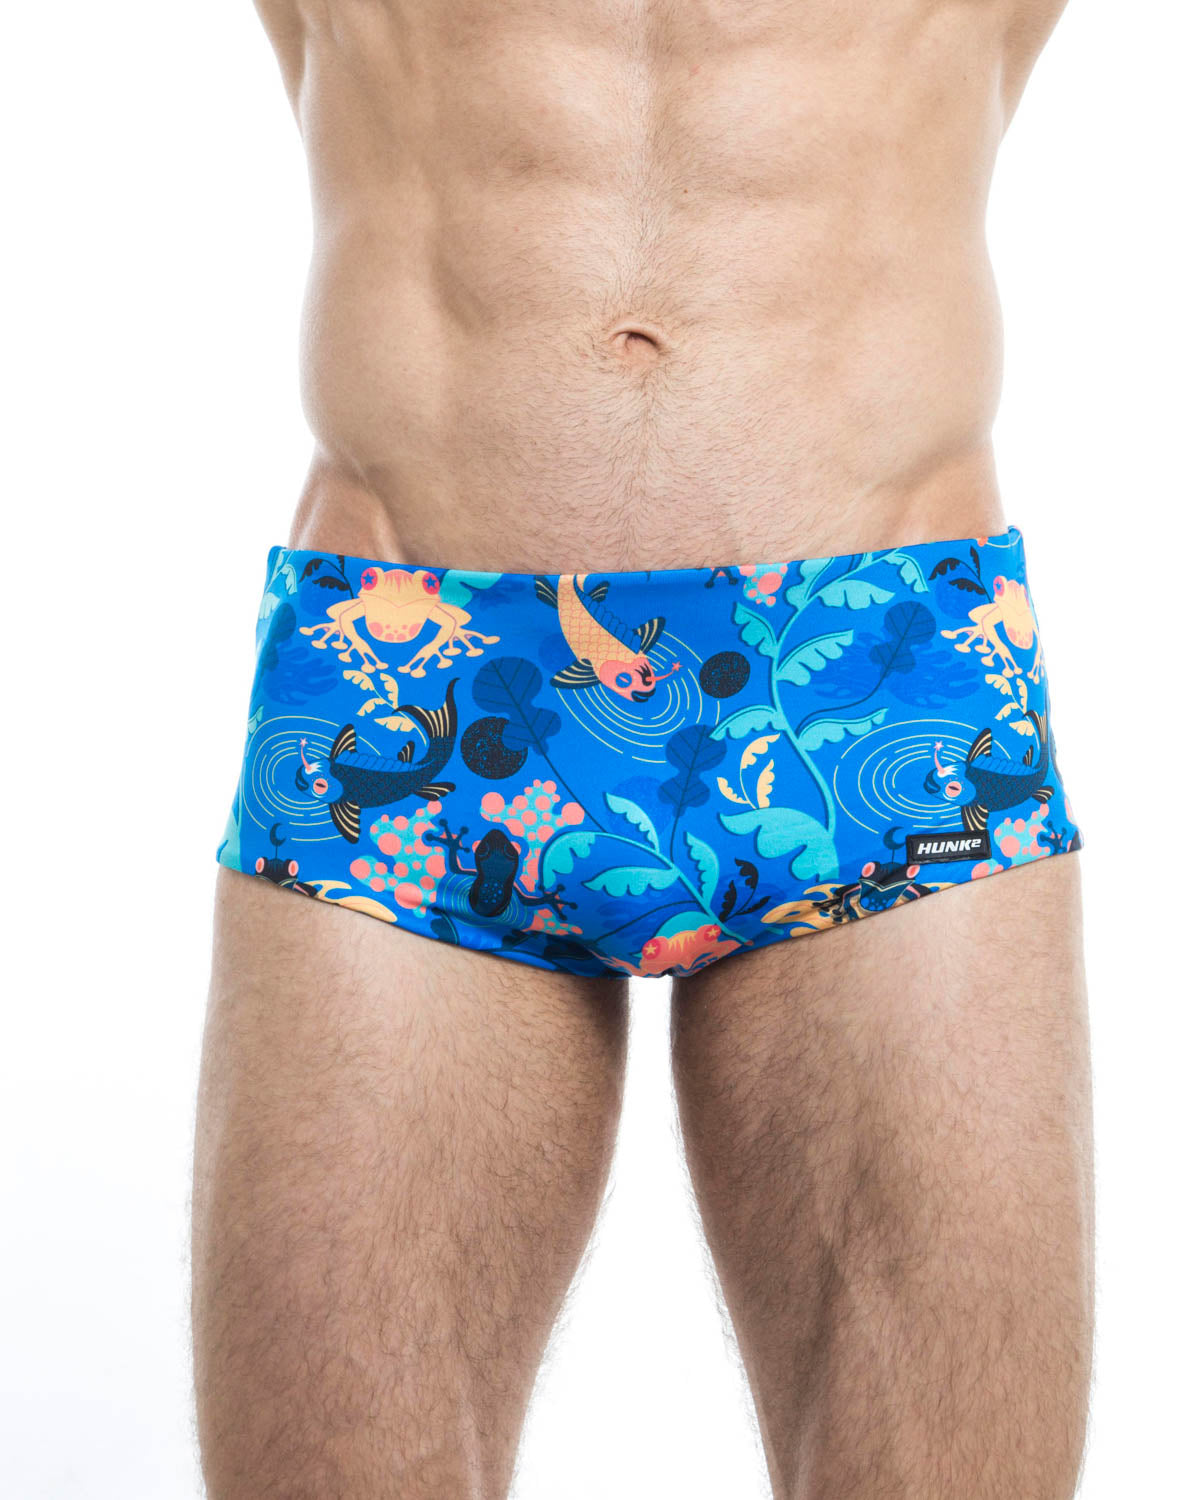 Men's swim trunks - HUNK2 Underwear Rampant Reversible Swim Trunks available at MensUnderwear.io - Image 1